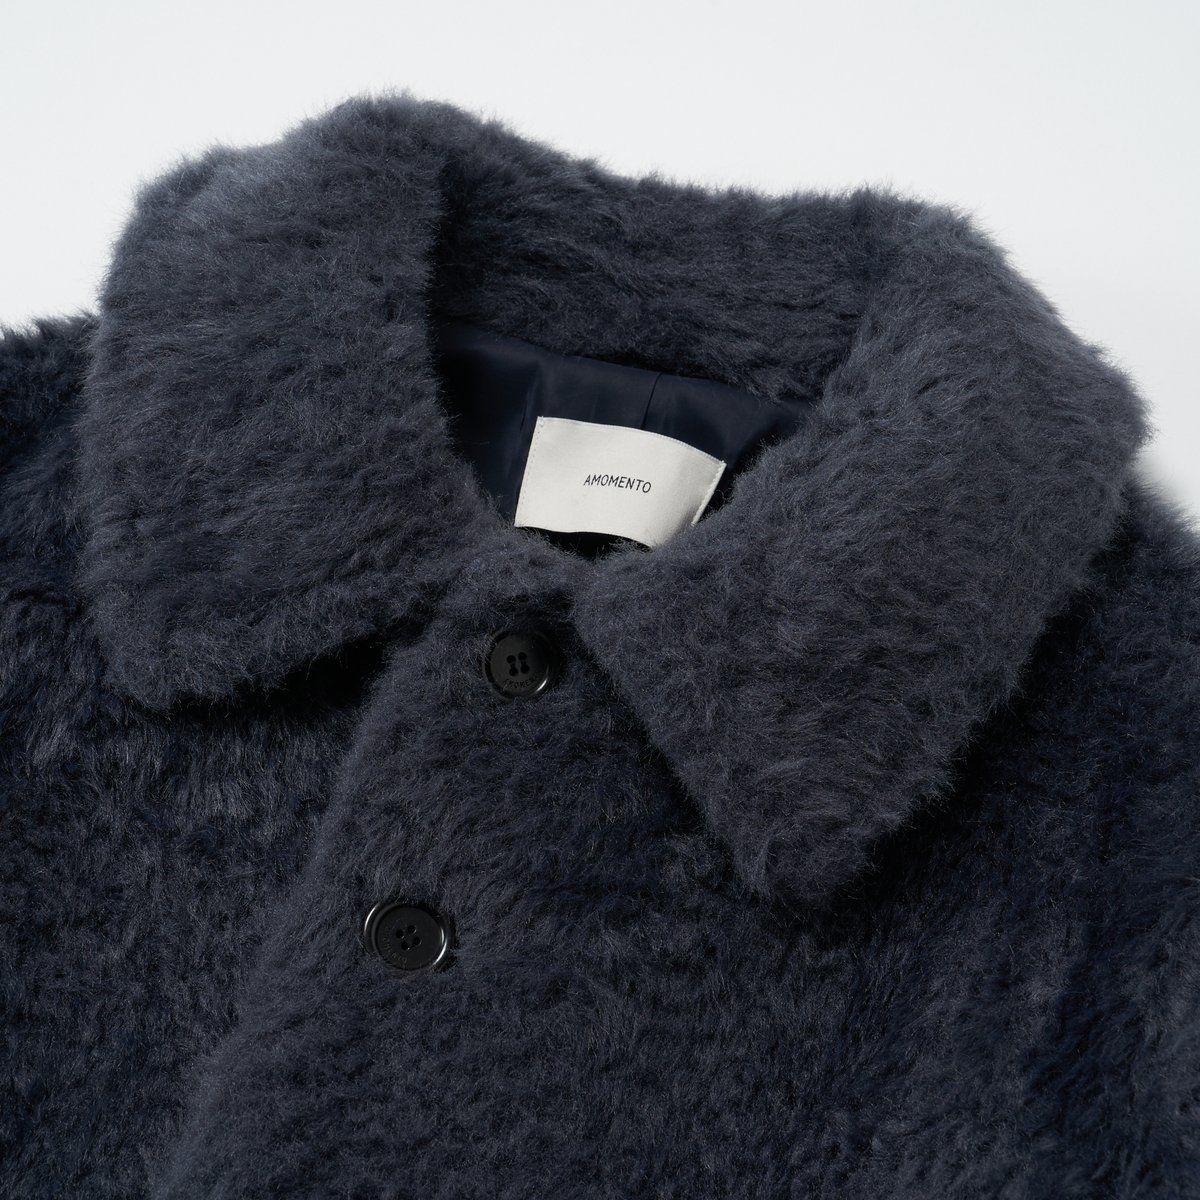 AMOMENTO (アモーメント) / Fur Mid Coat | HIBIYA CENT...